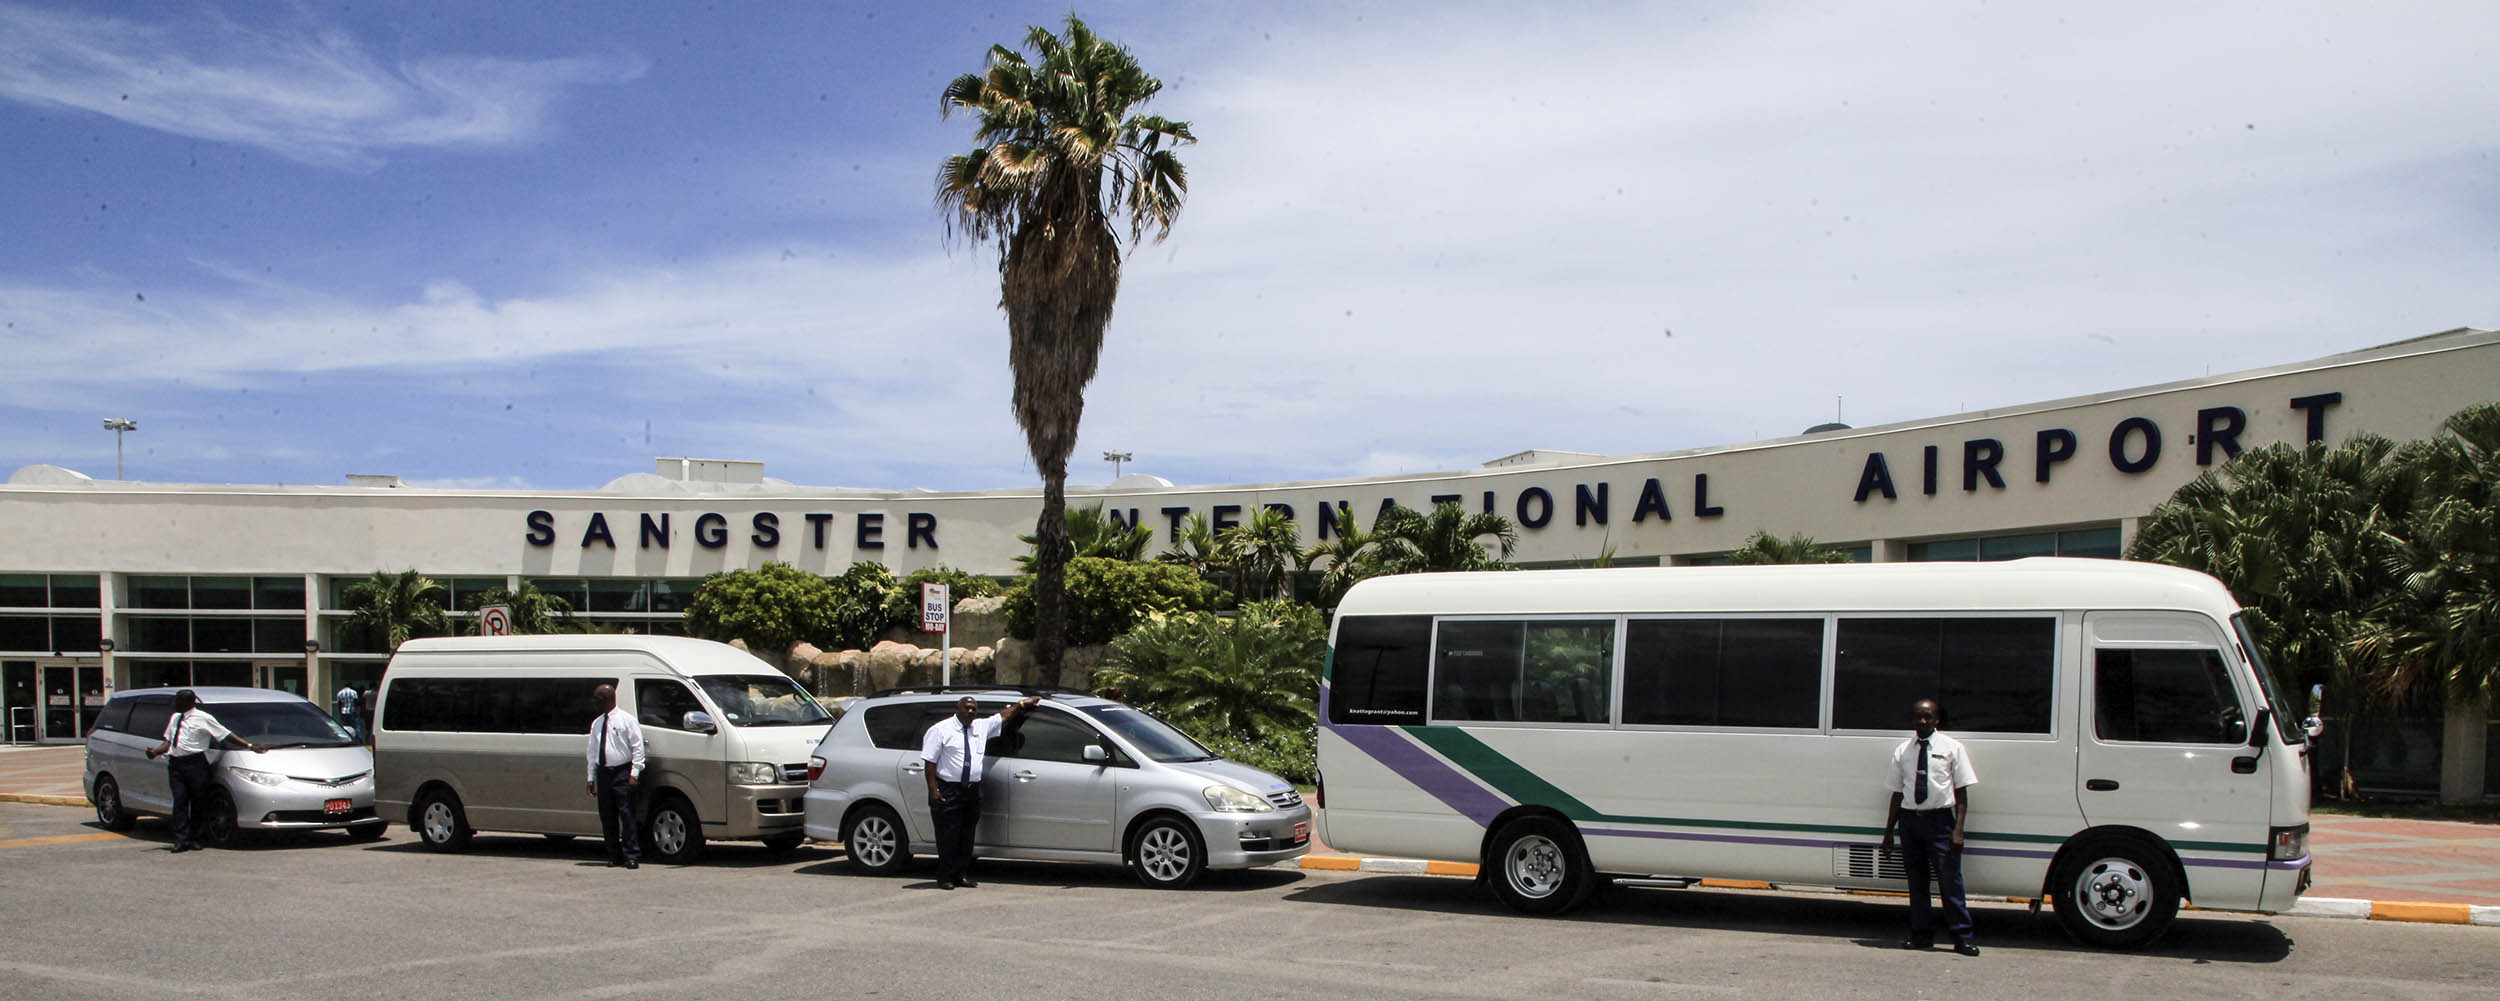 JUTA Taxi and Tours Jamaica @ Sangster International Airport - Montego Bay Jamaica